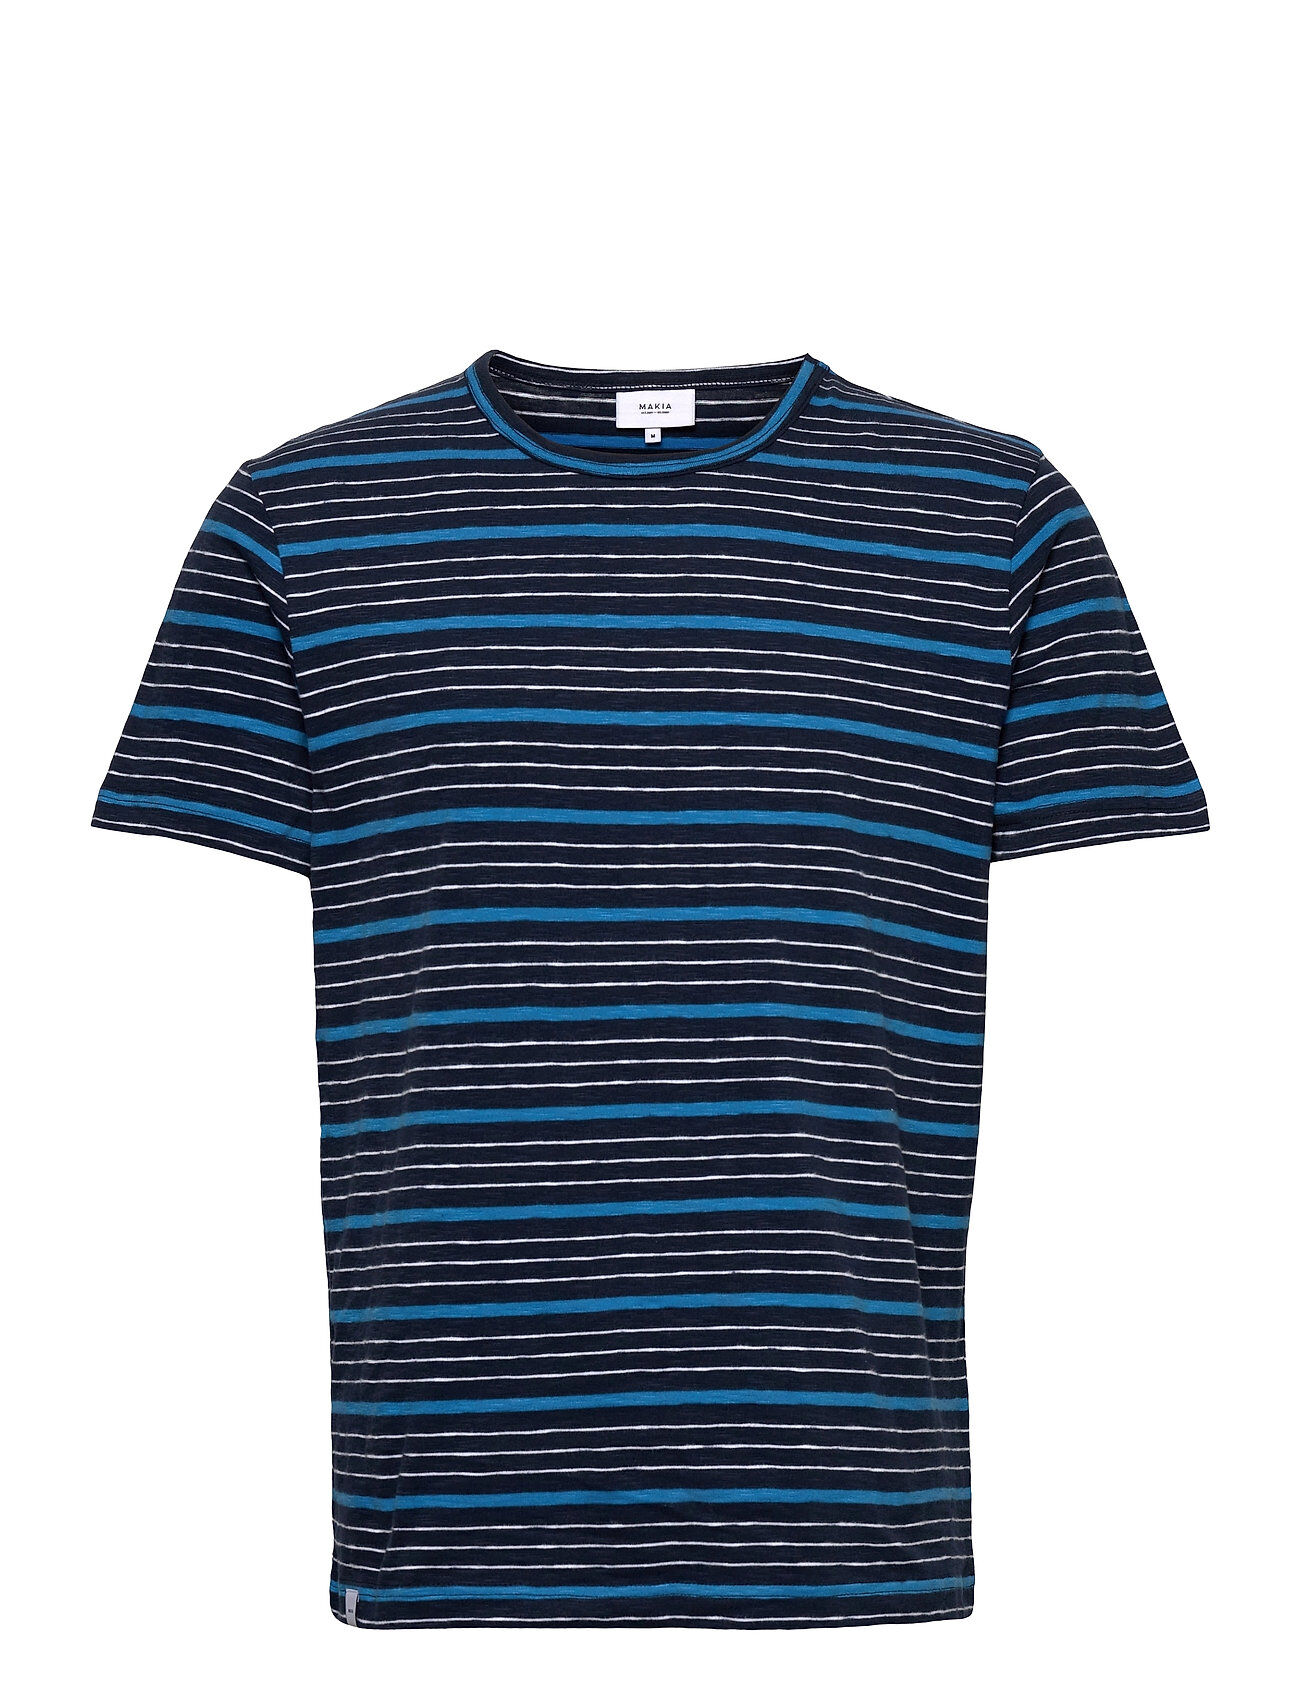 Makia Joshua T-Shirt T-shirts Short-sleeved Blå Makia